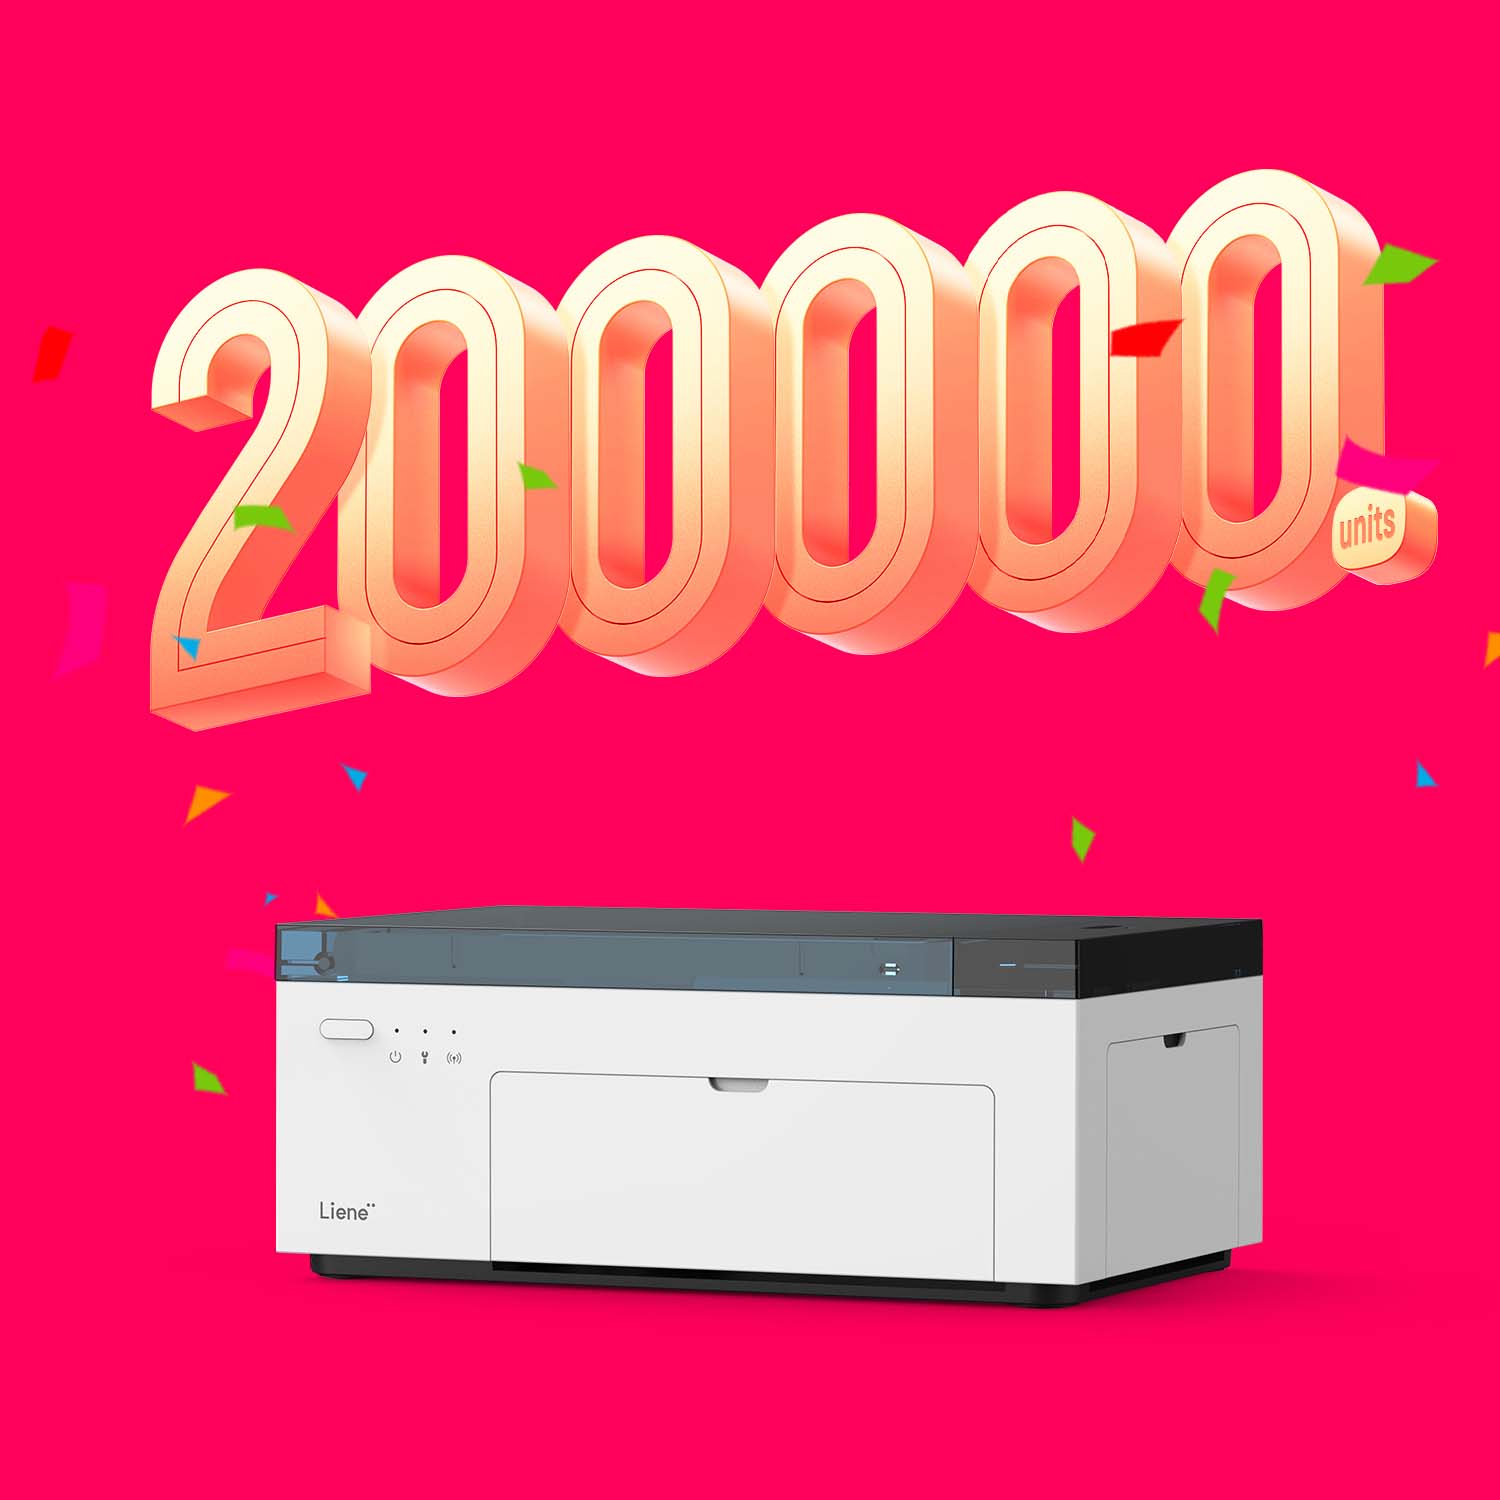 Liene photo printer sold more than 200,000 units on Amazon